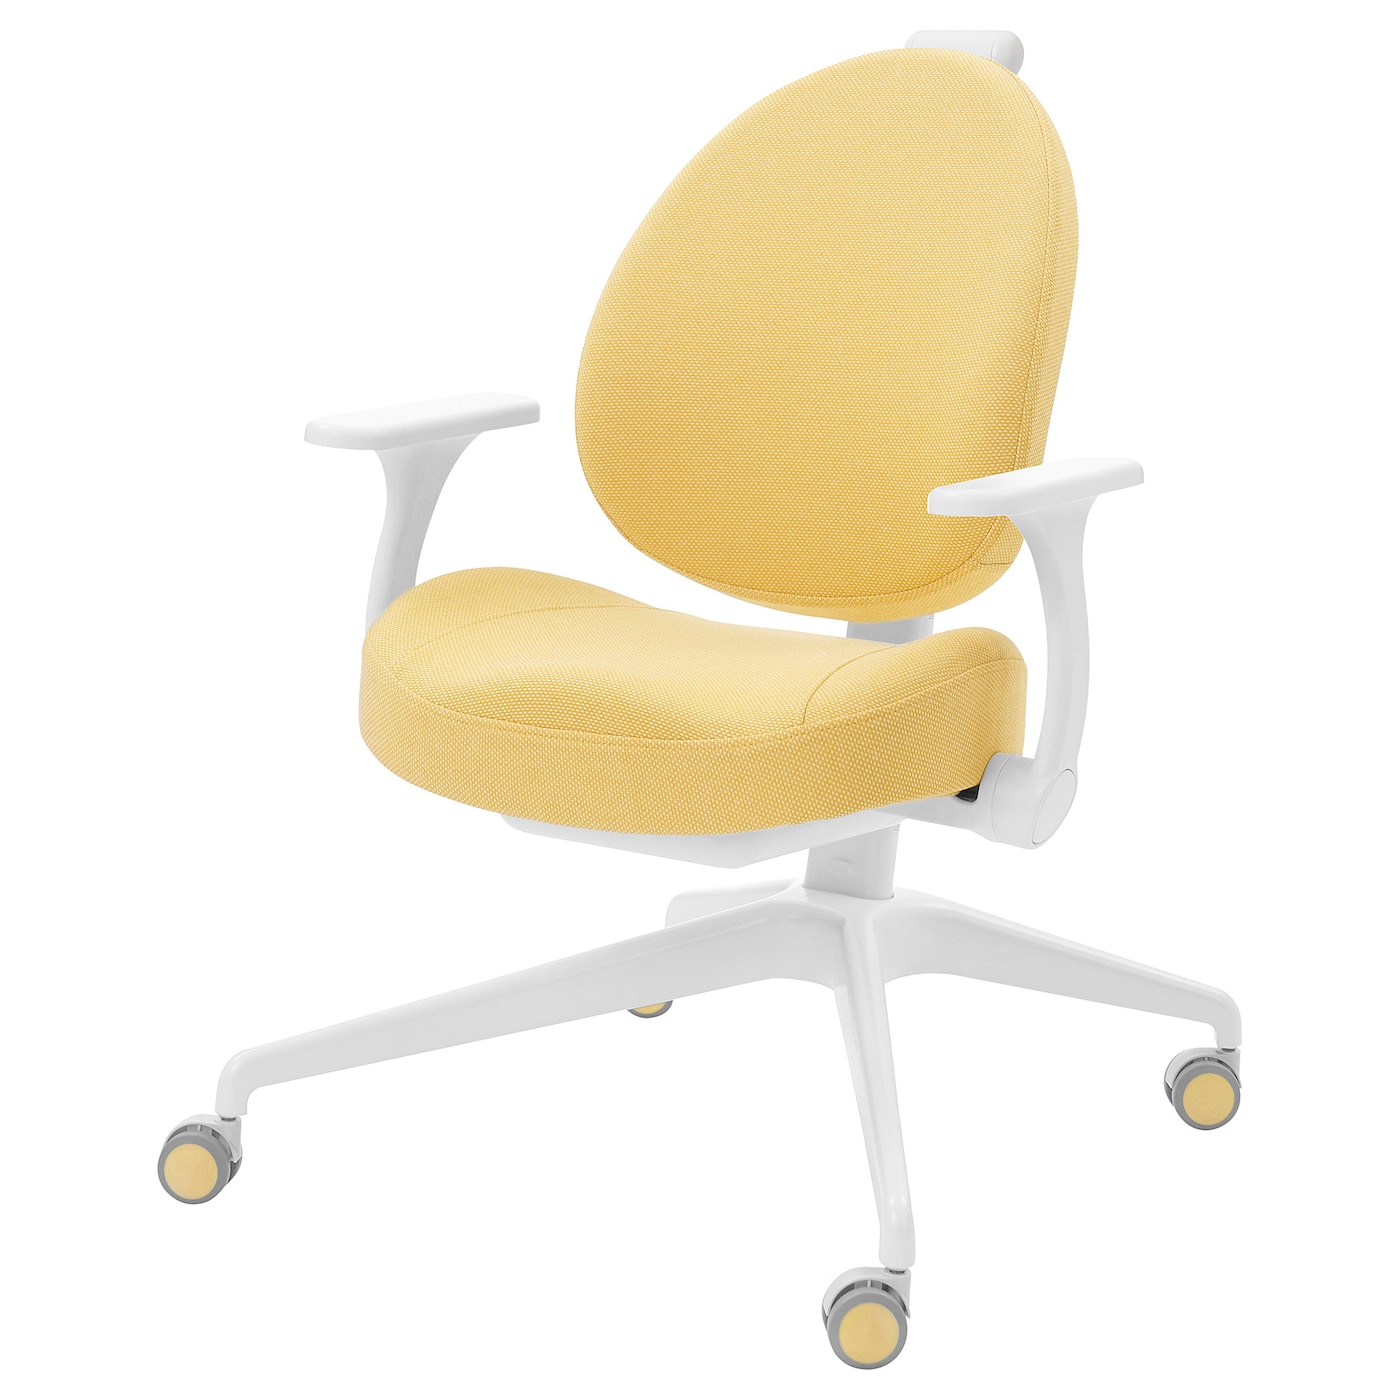 MICKE 米克/ GUNRIK 古里克桌椅白色/黄色- IKEA